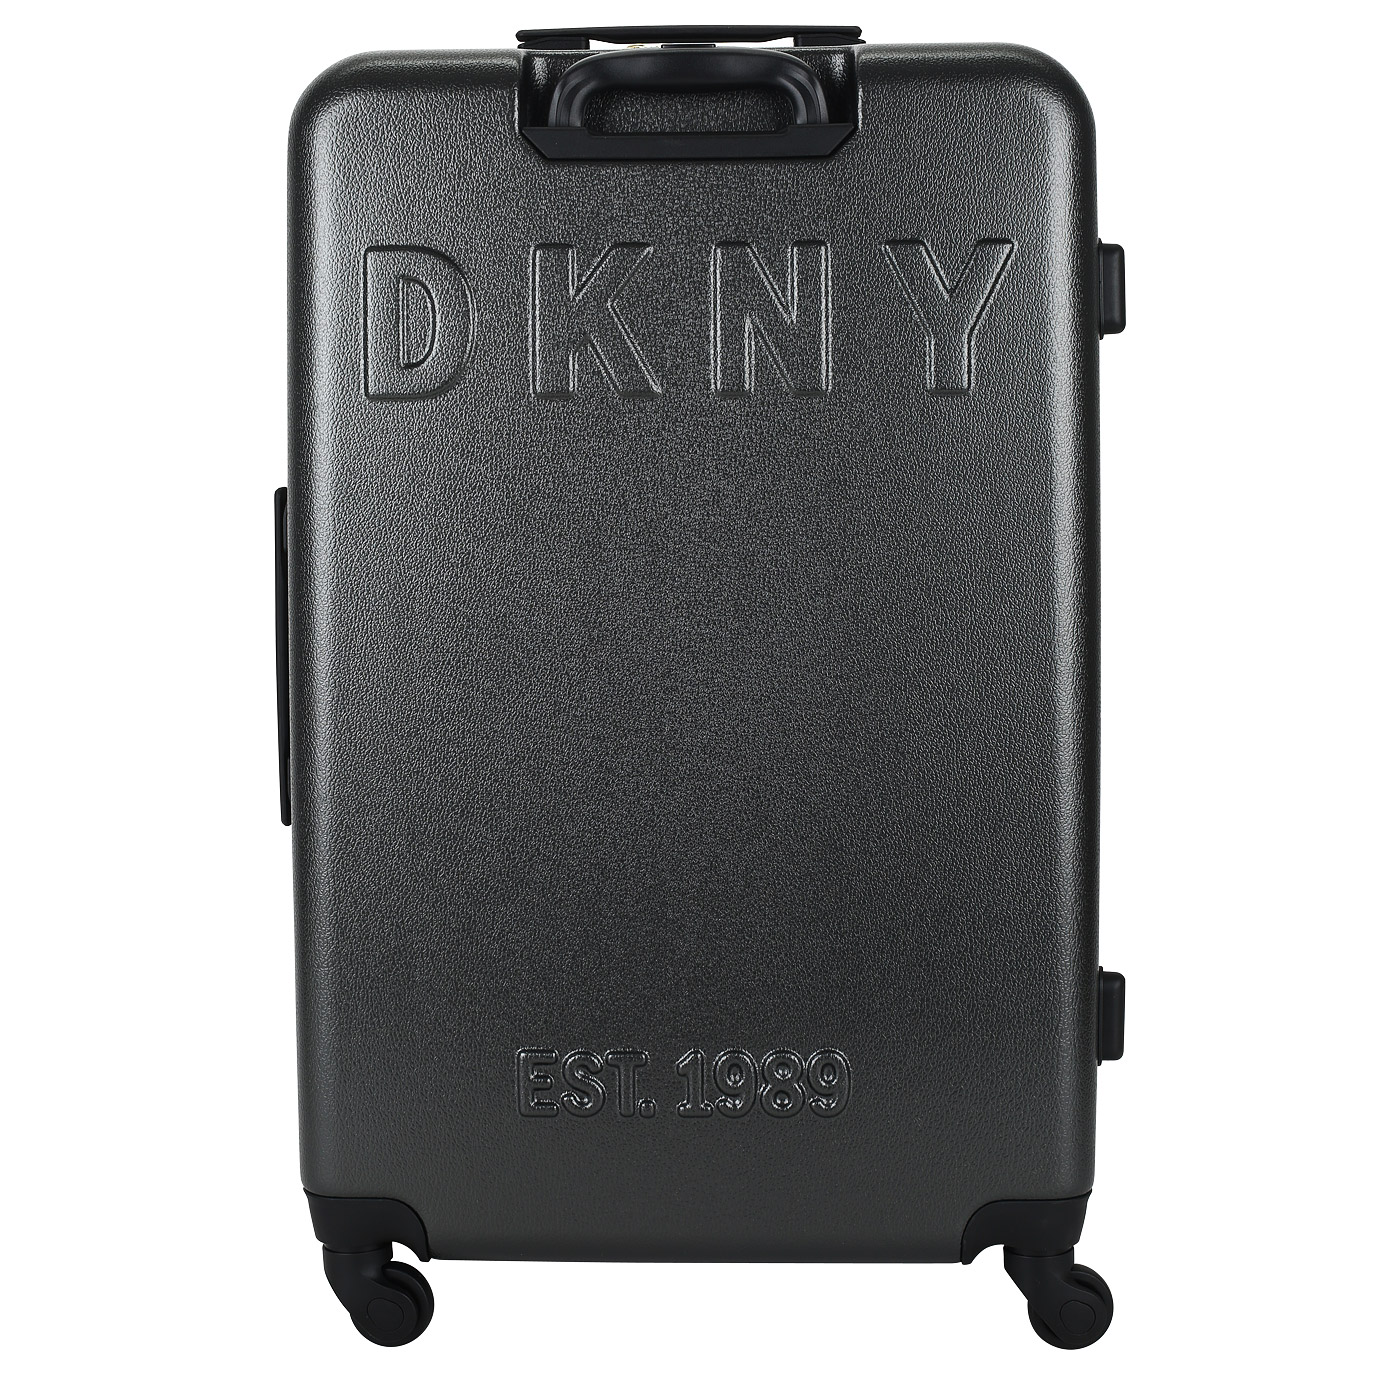 Чемодан большой L из ABS-пластика DKNY DKNY-434 Diva